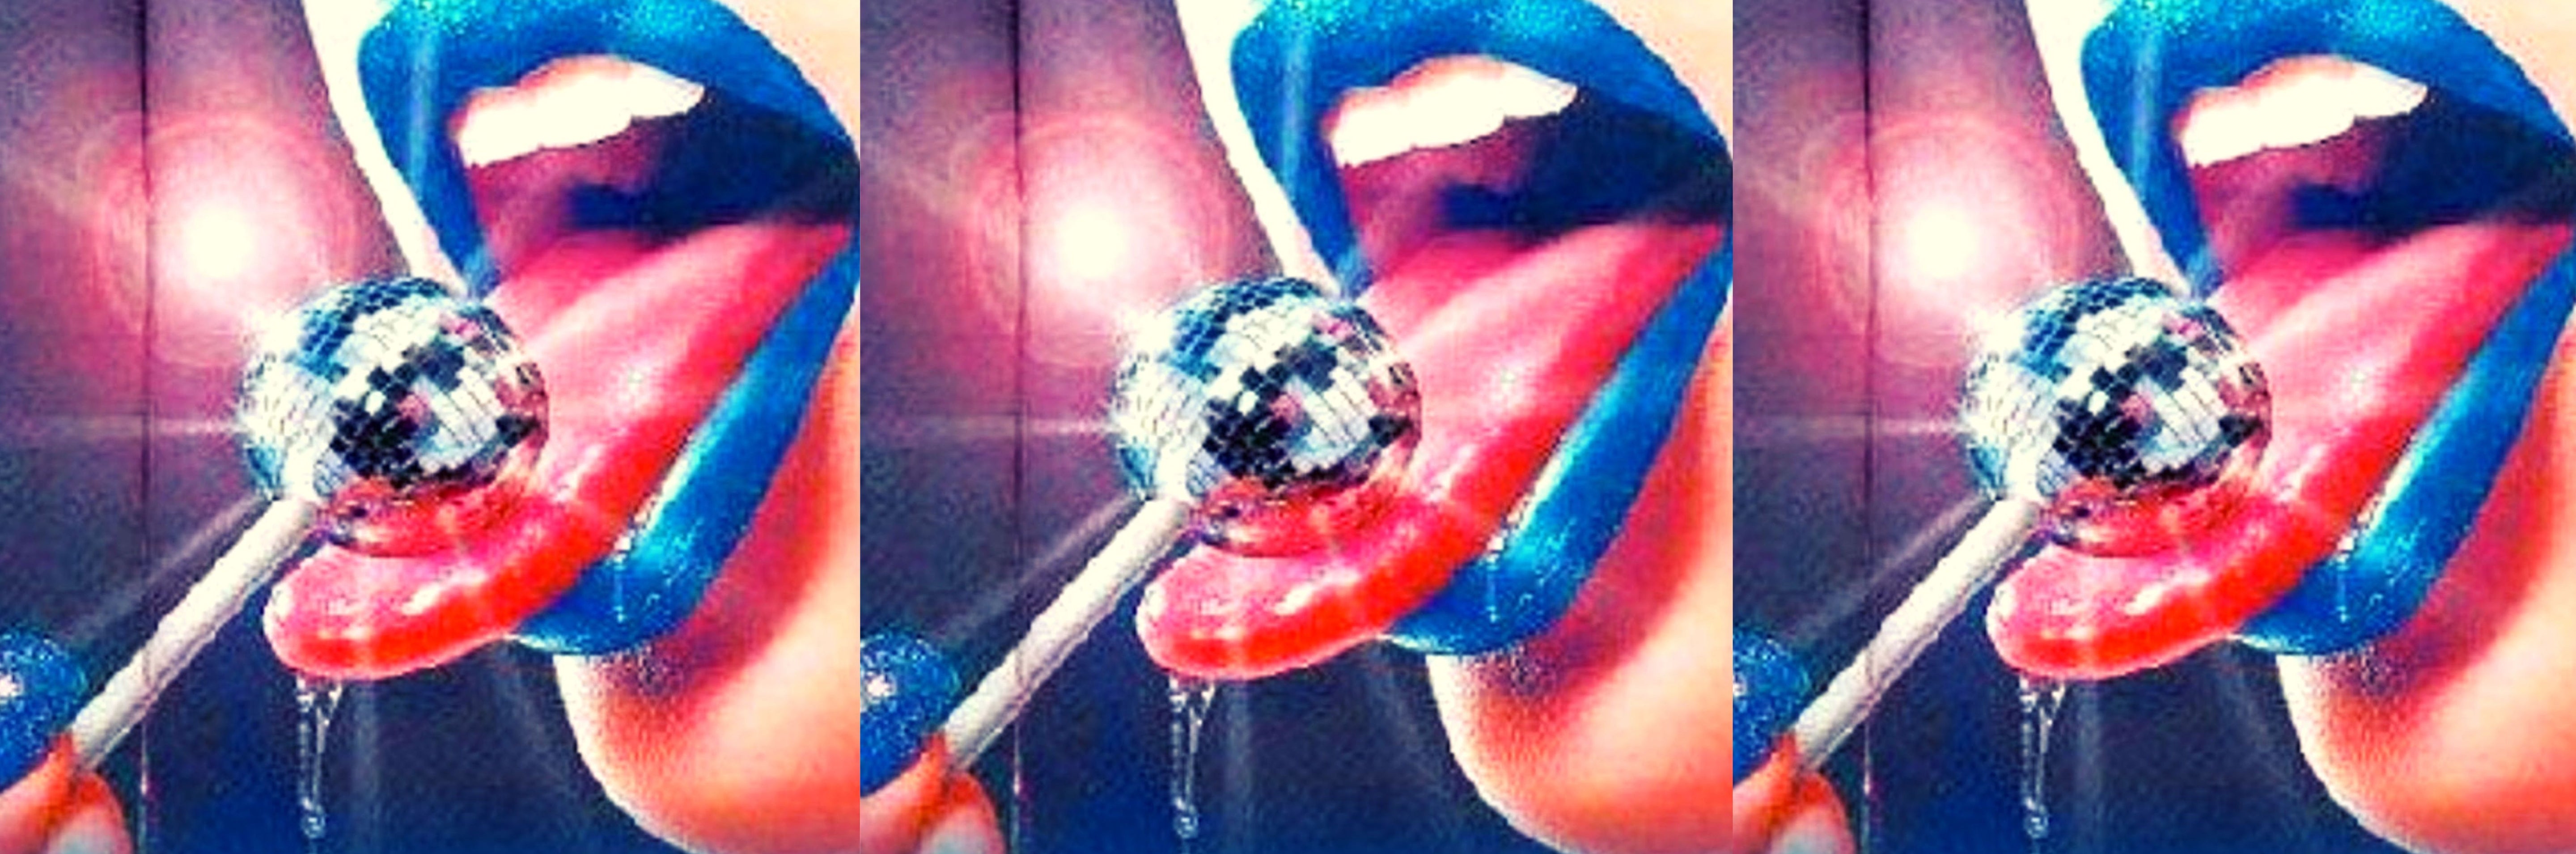 woman with blue lipstick licking glitterball lolipop